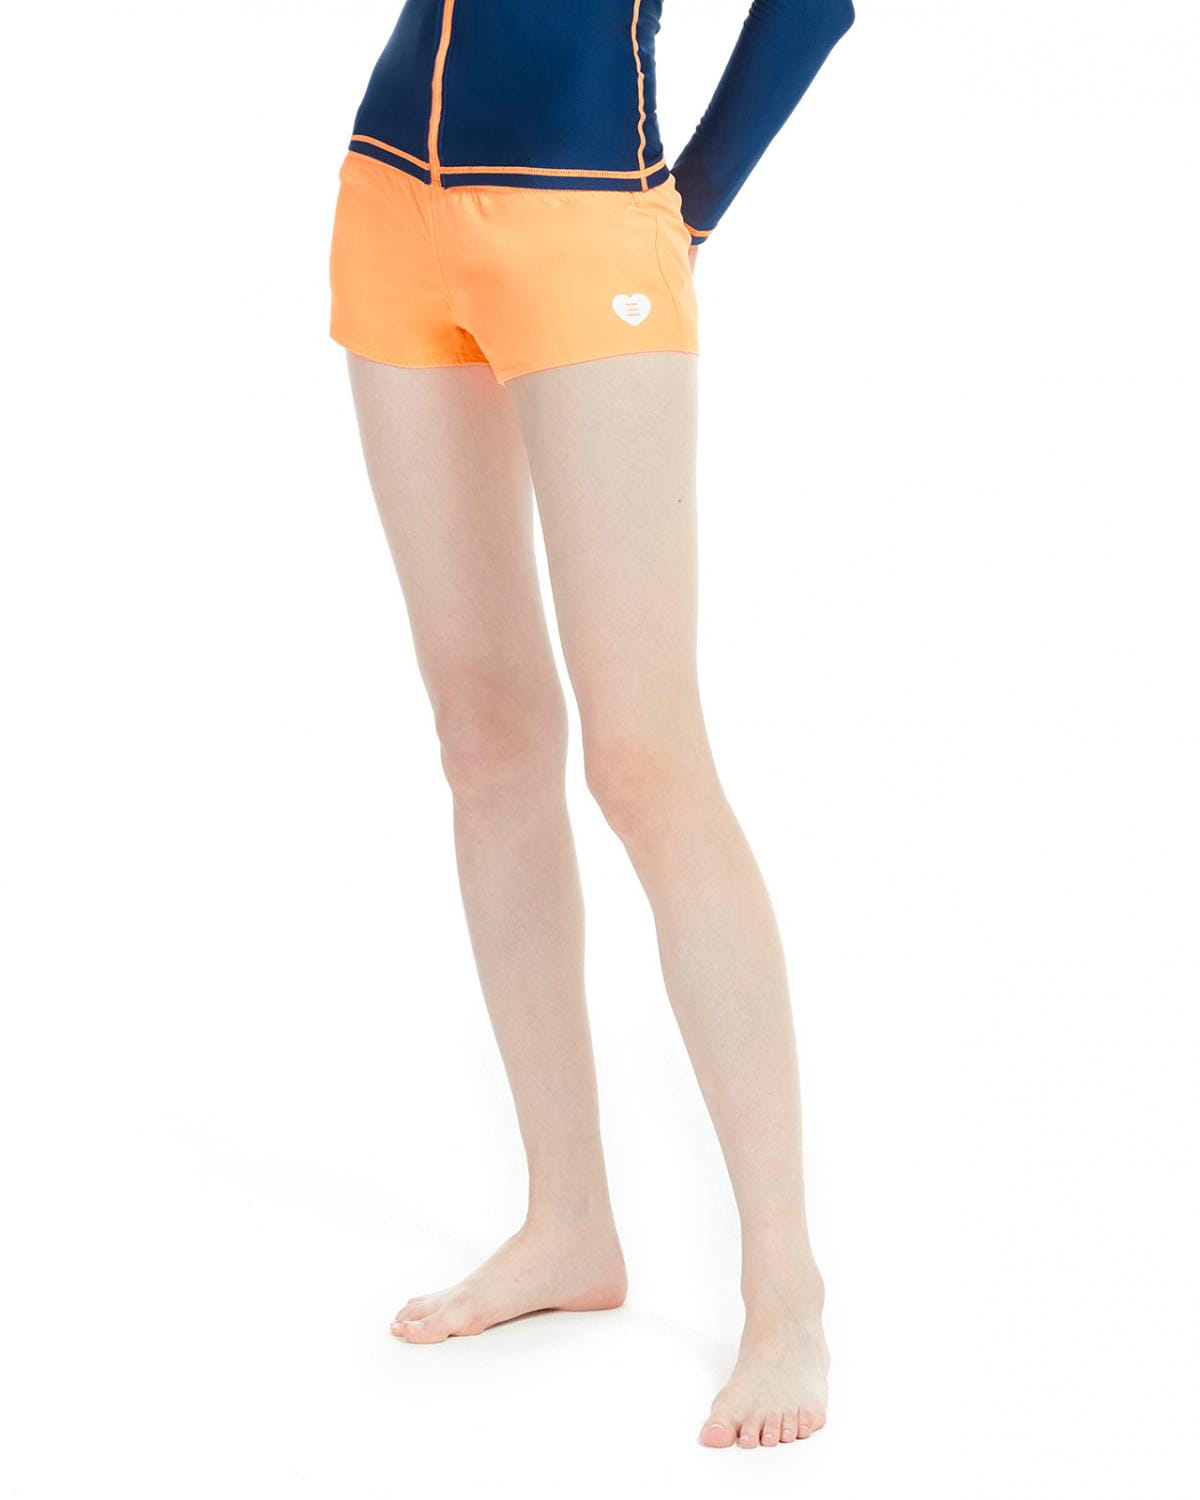 【BARREL】MONACO 女款衝浪短褲 #PEACH 1